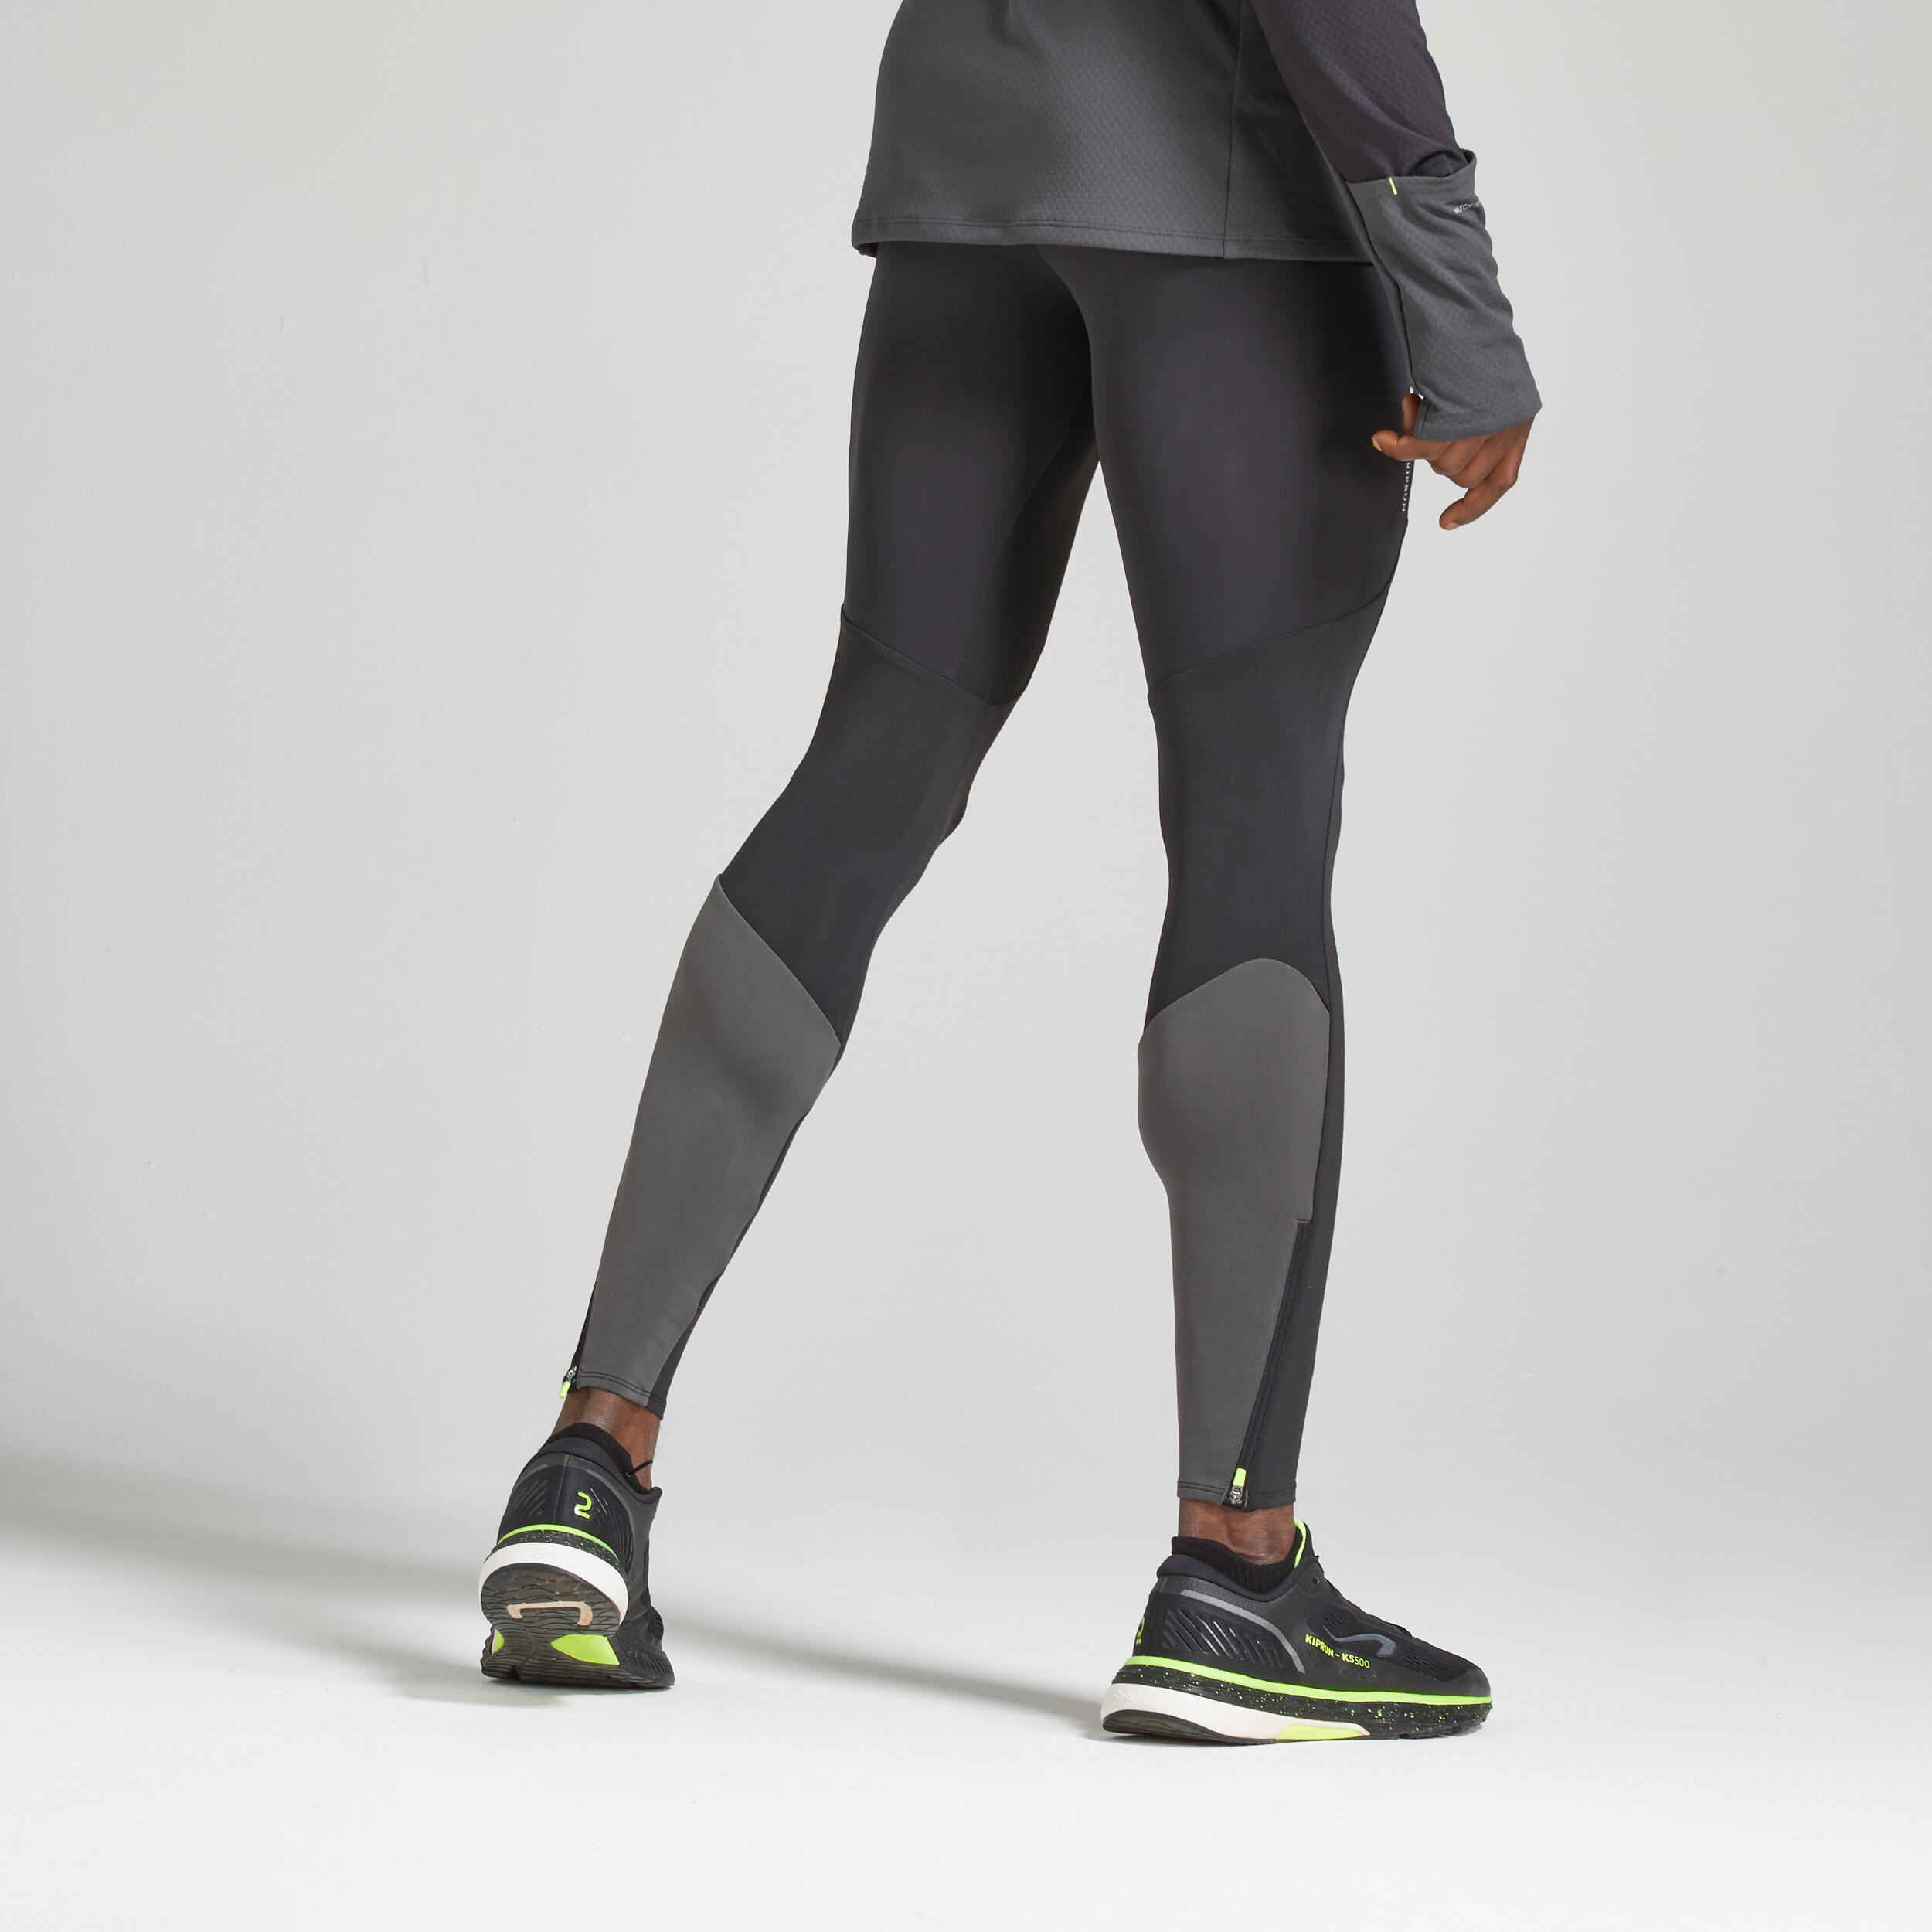 Men's Running Leggings - Warm Black/Grey - [EN] smoked black